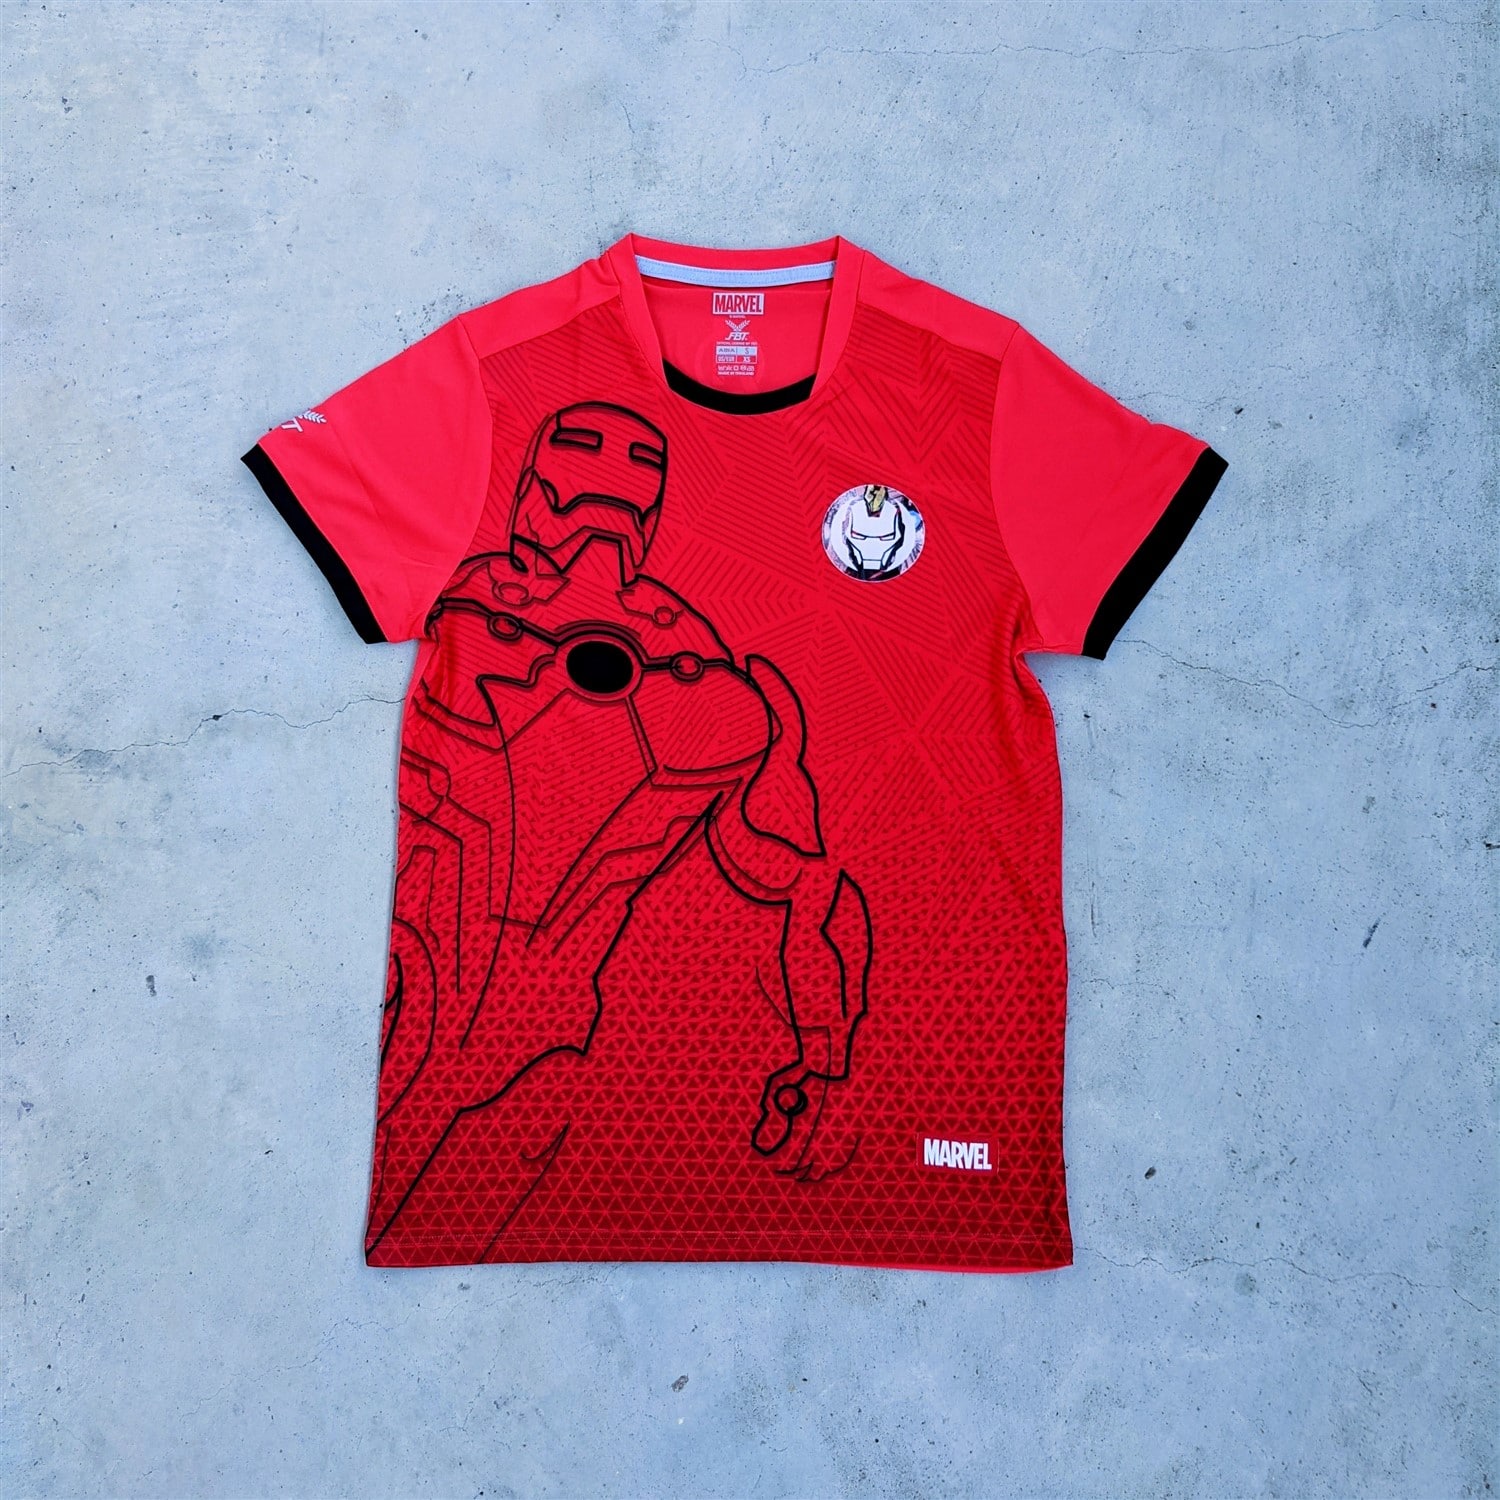 Marvel x FBT football jerseys - Iron Man